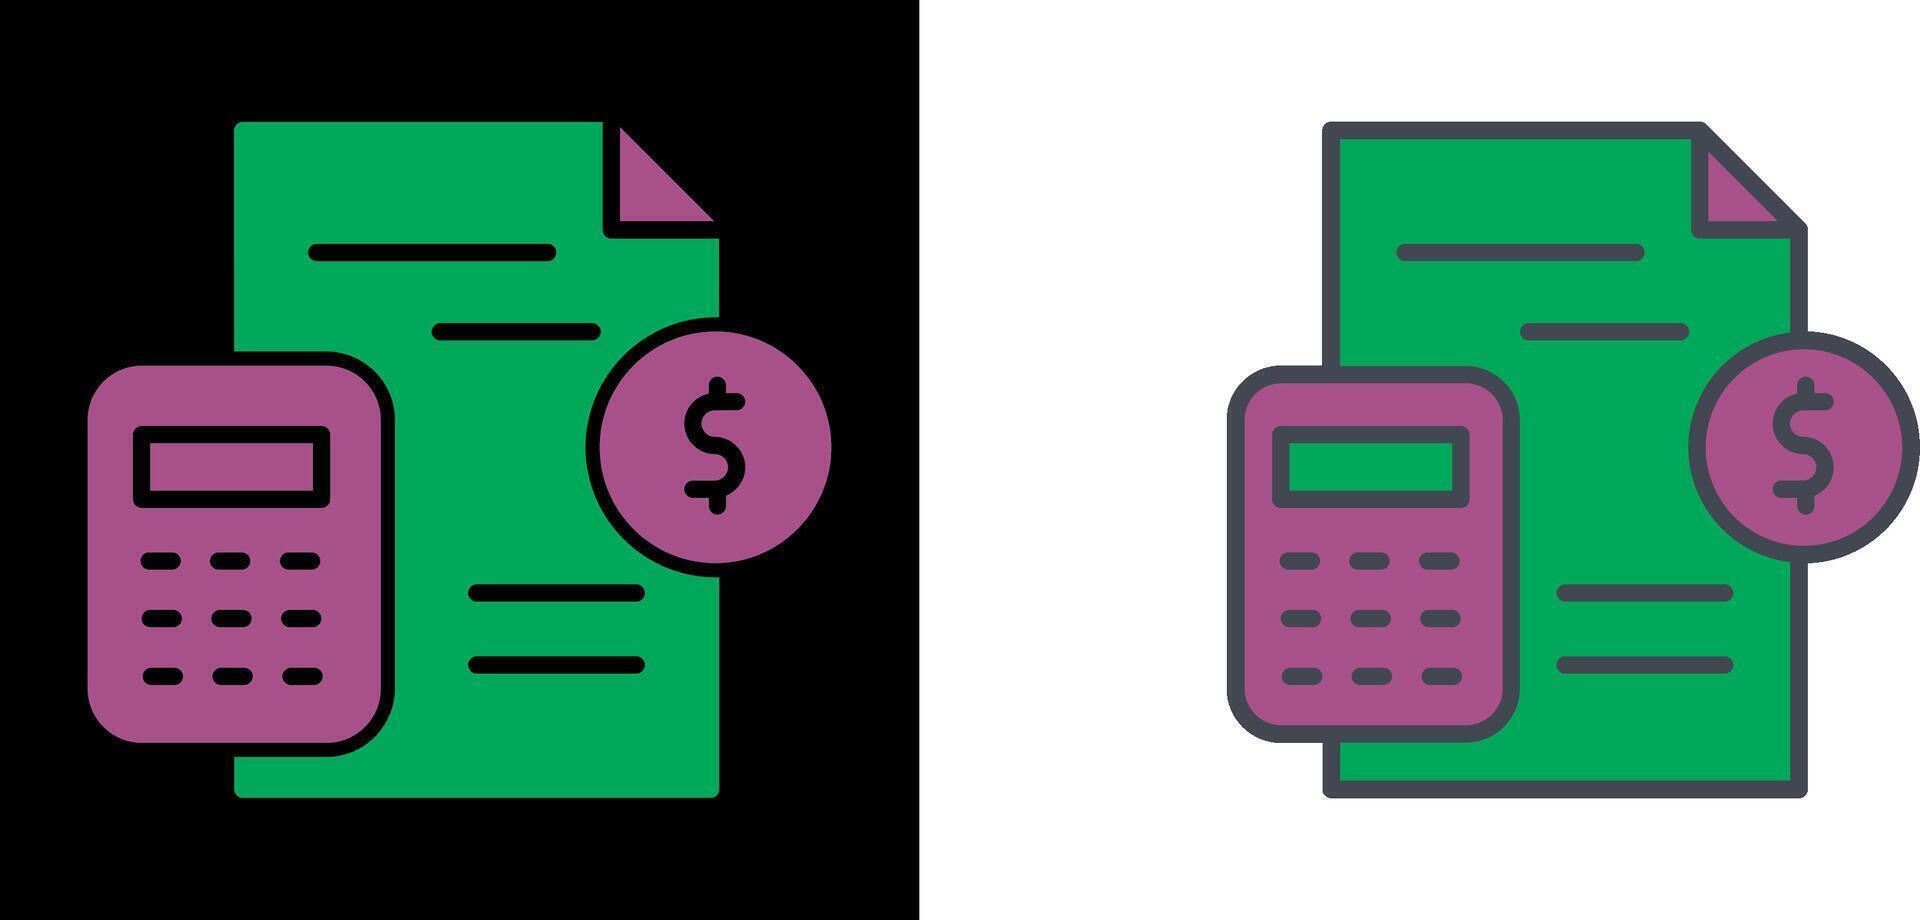 Accounting Icon Design vector